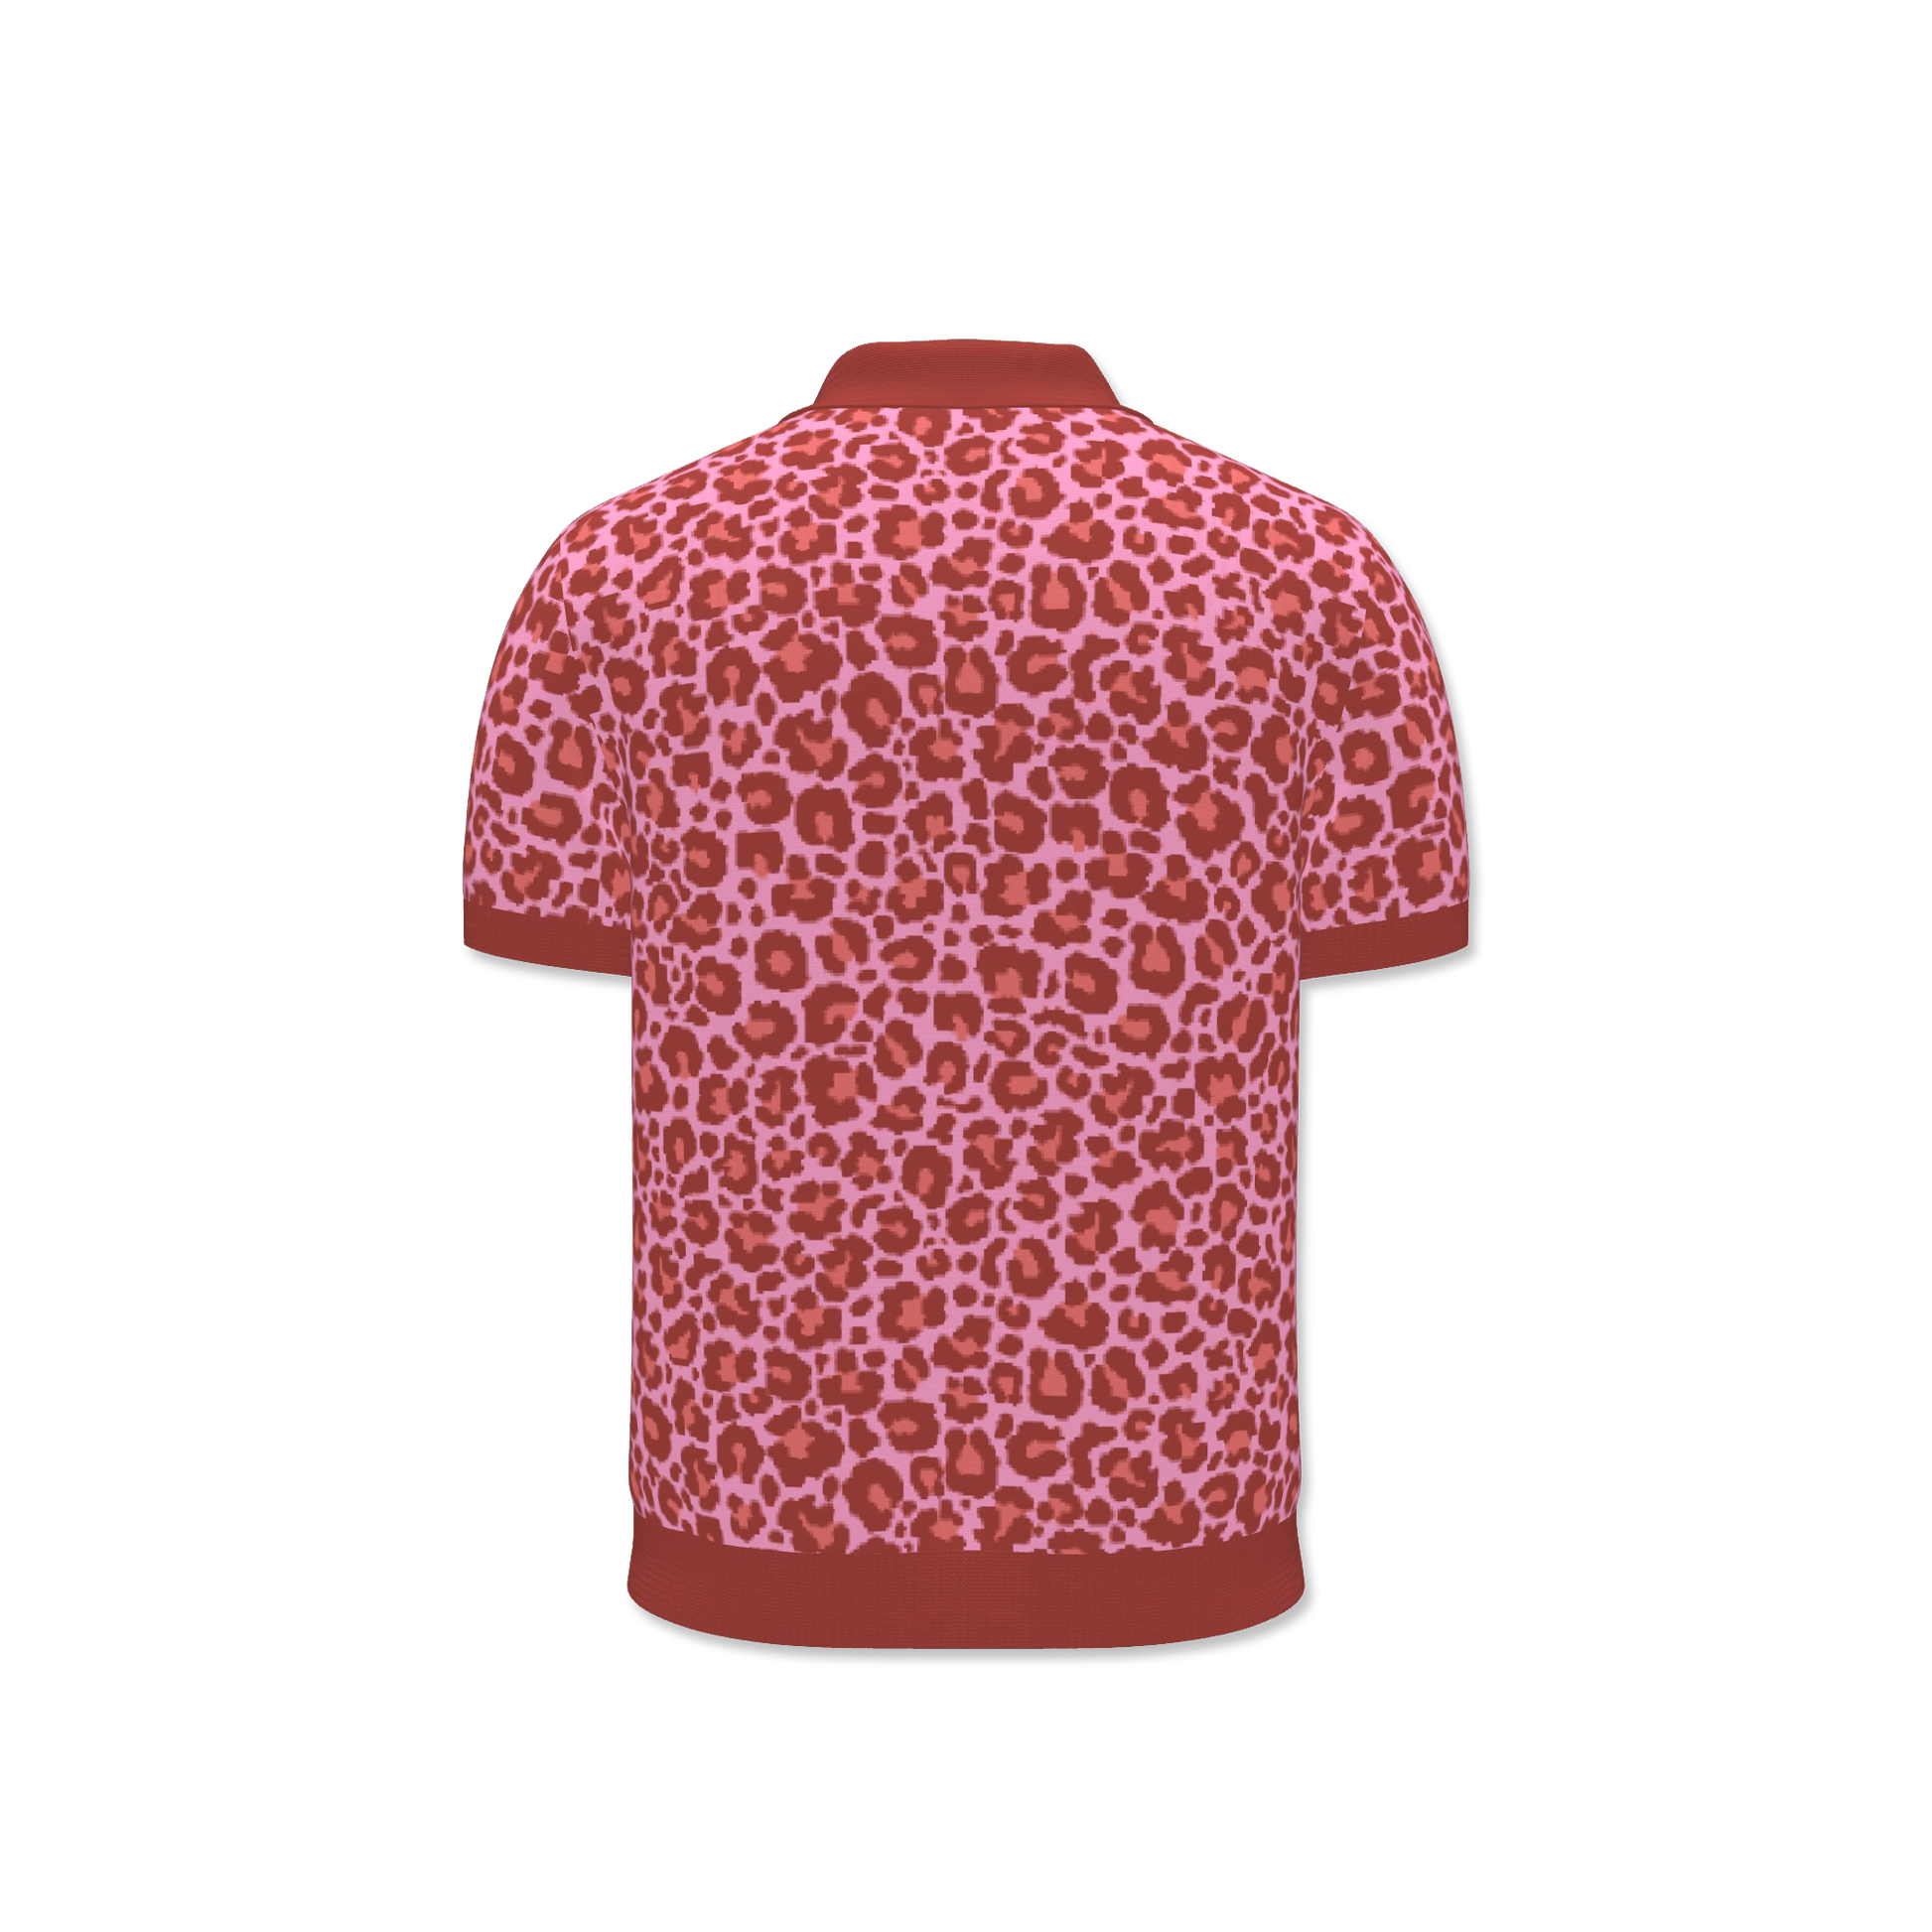 Leopard Lounge Valentine Mens V-Neck Polo Shirt by Studio Ten Design